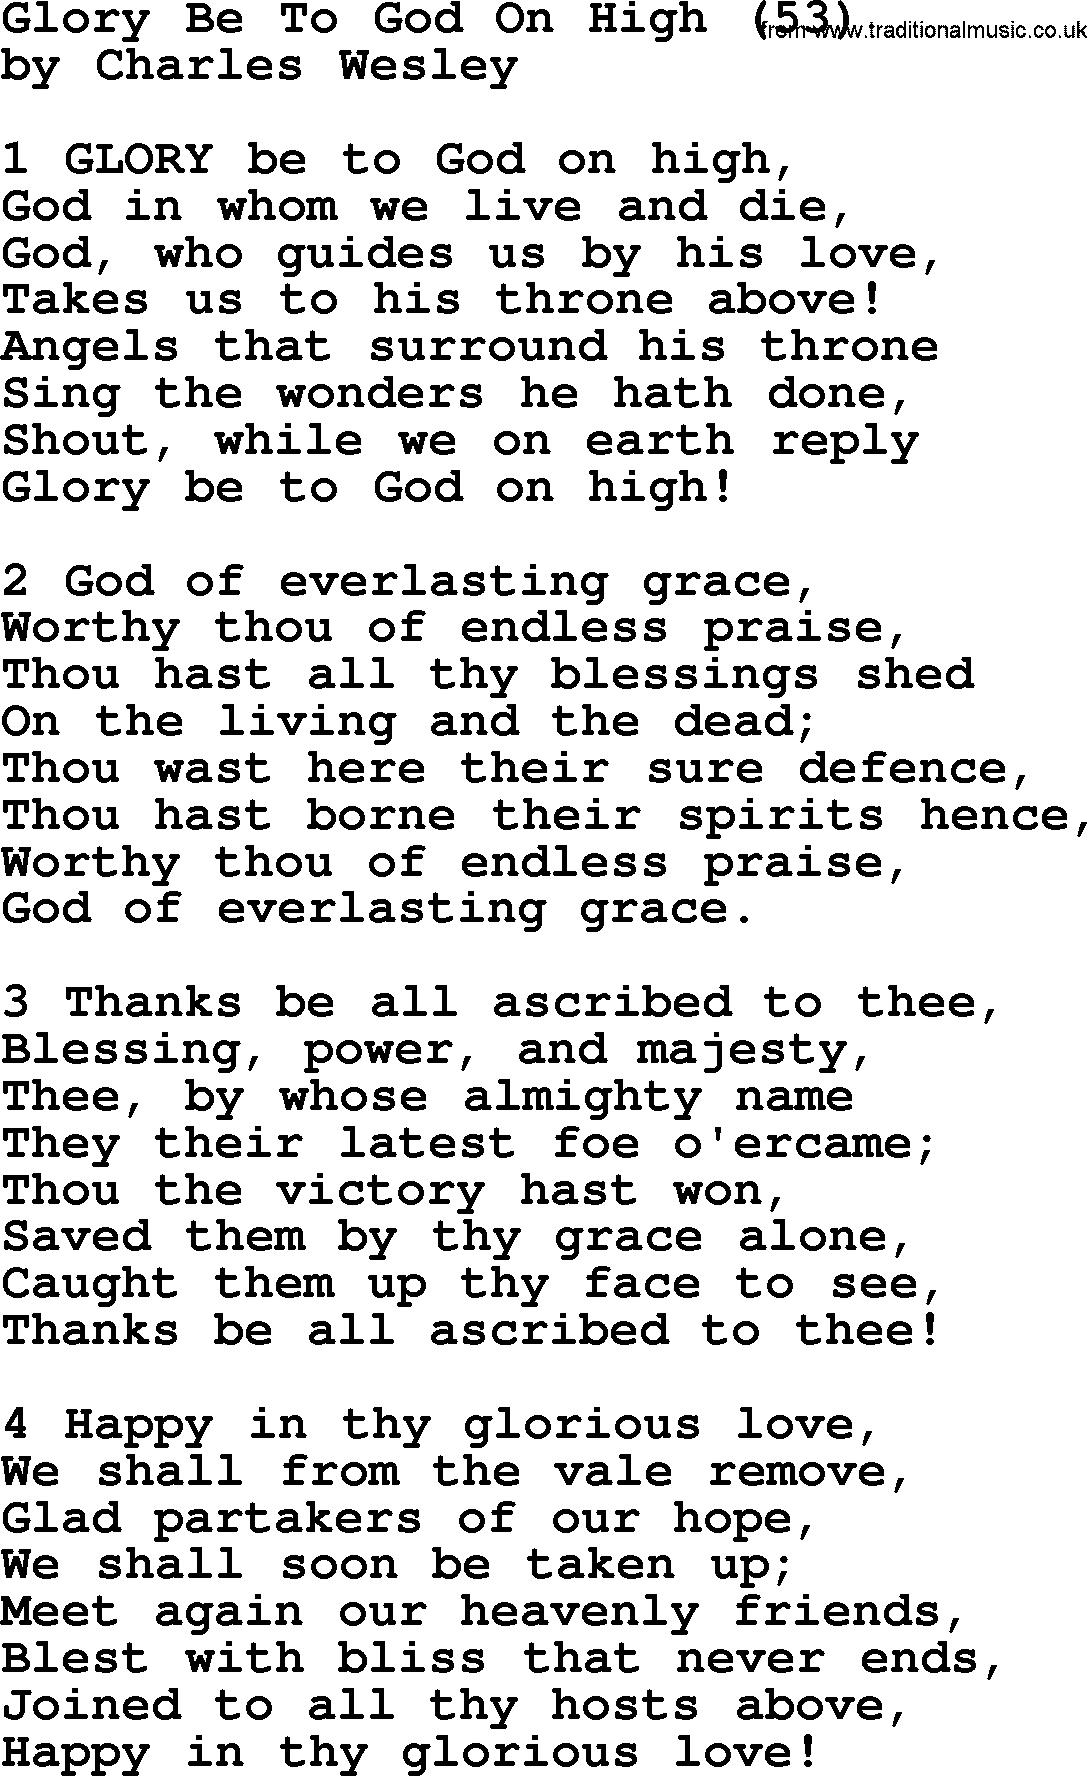 Charles Wesley hymn: Glory Be To God On High (53), lyrics